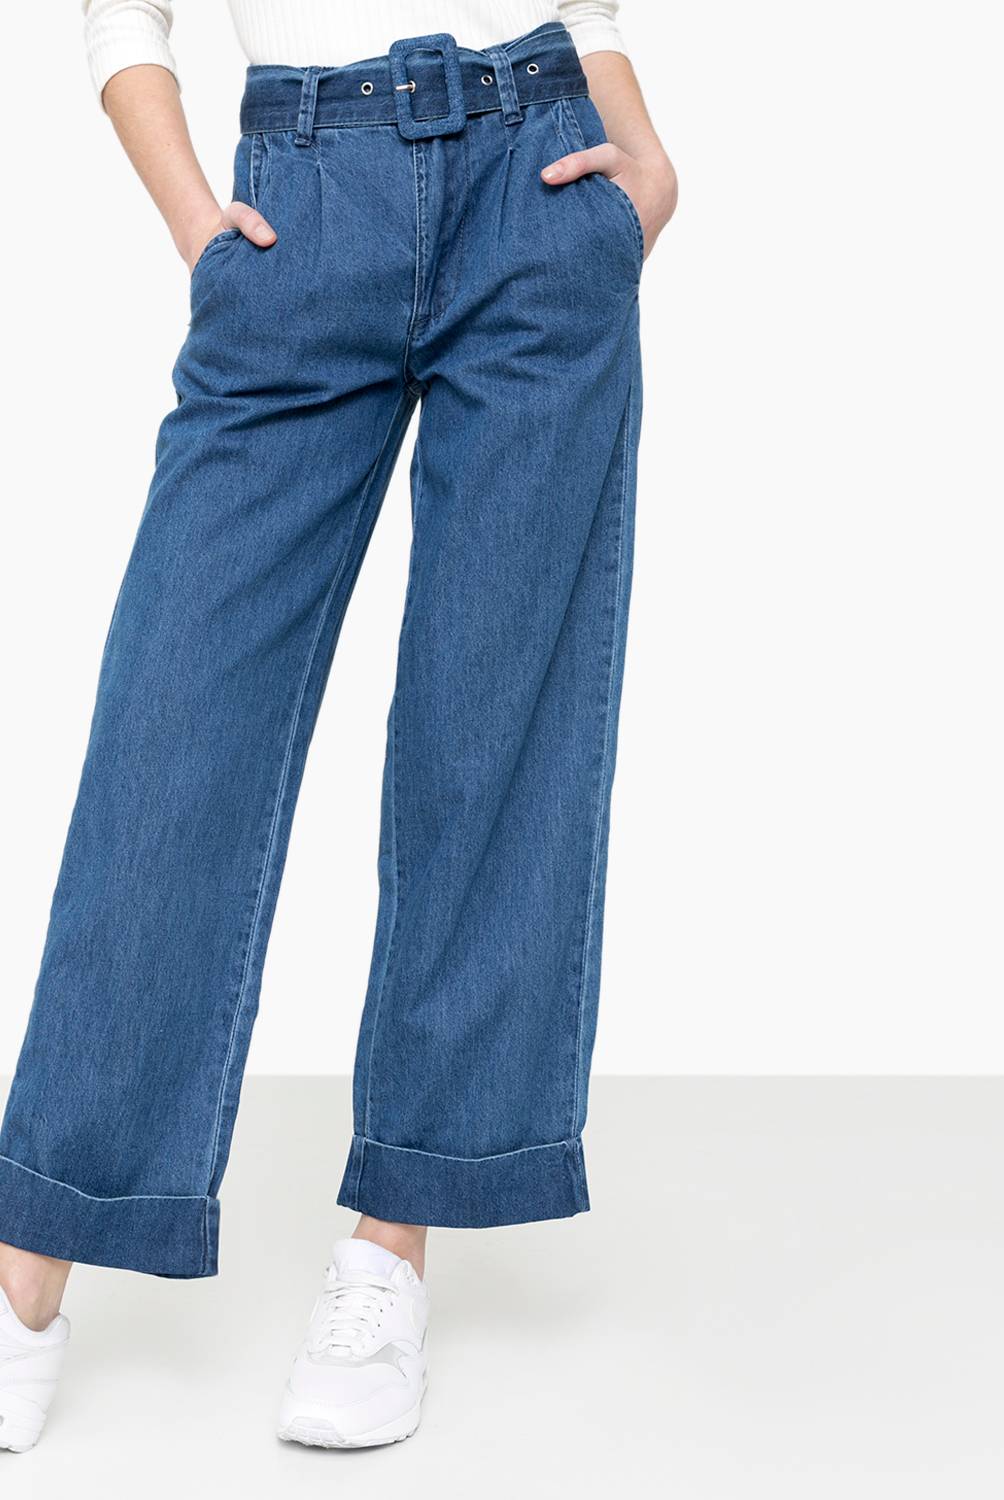 Americanino - Jeans